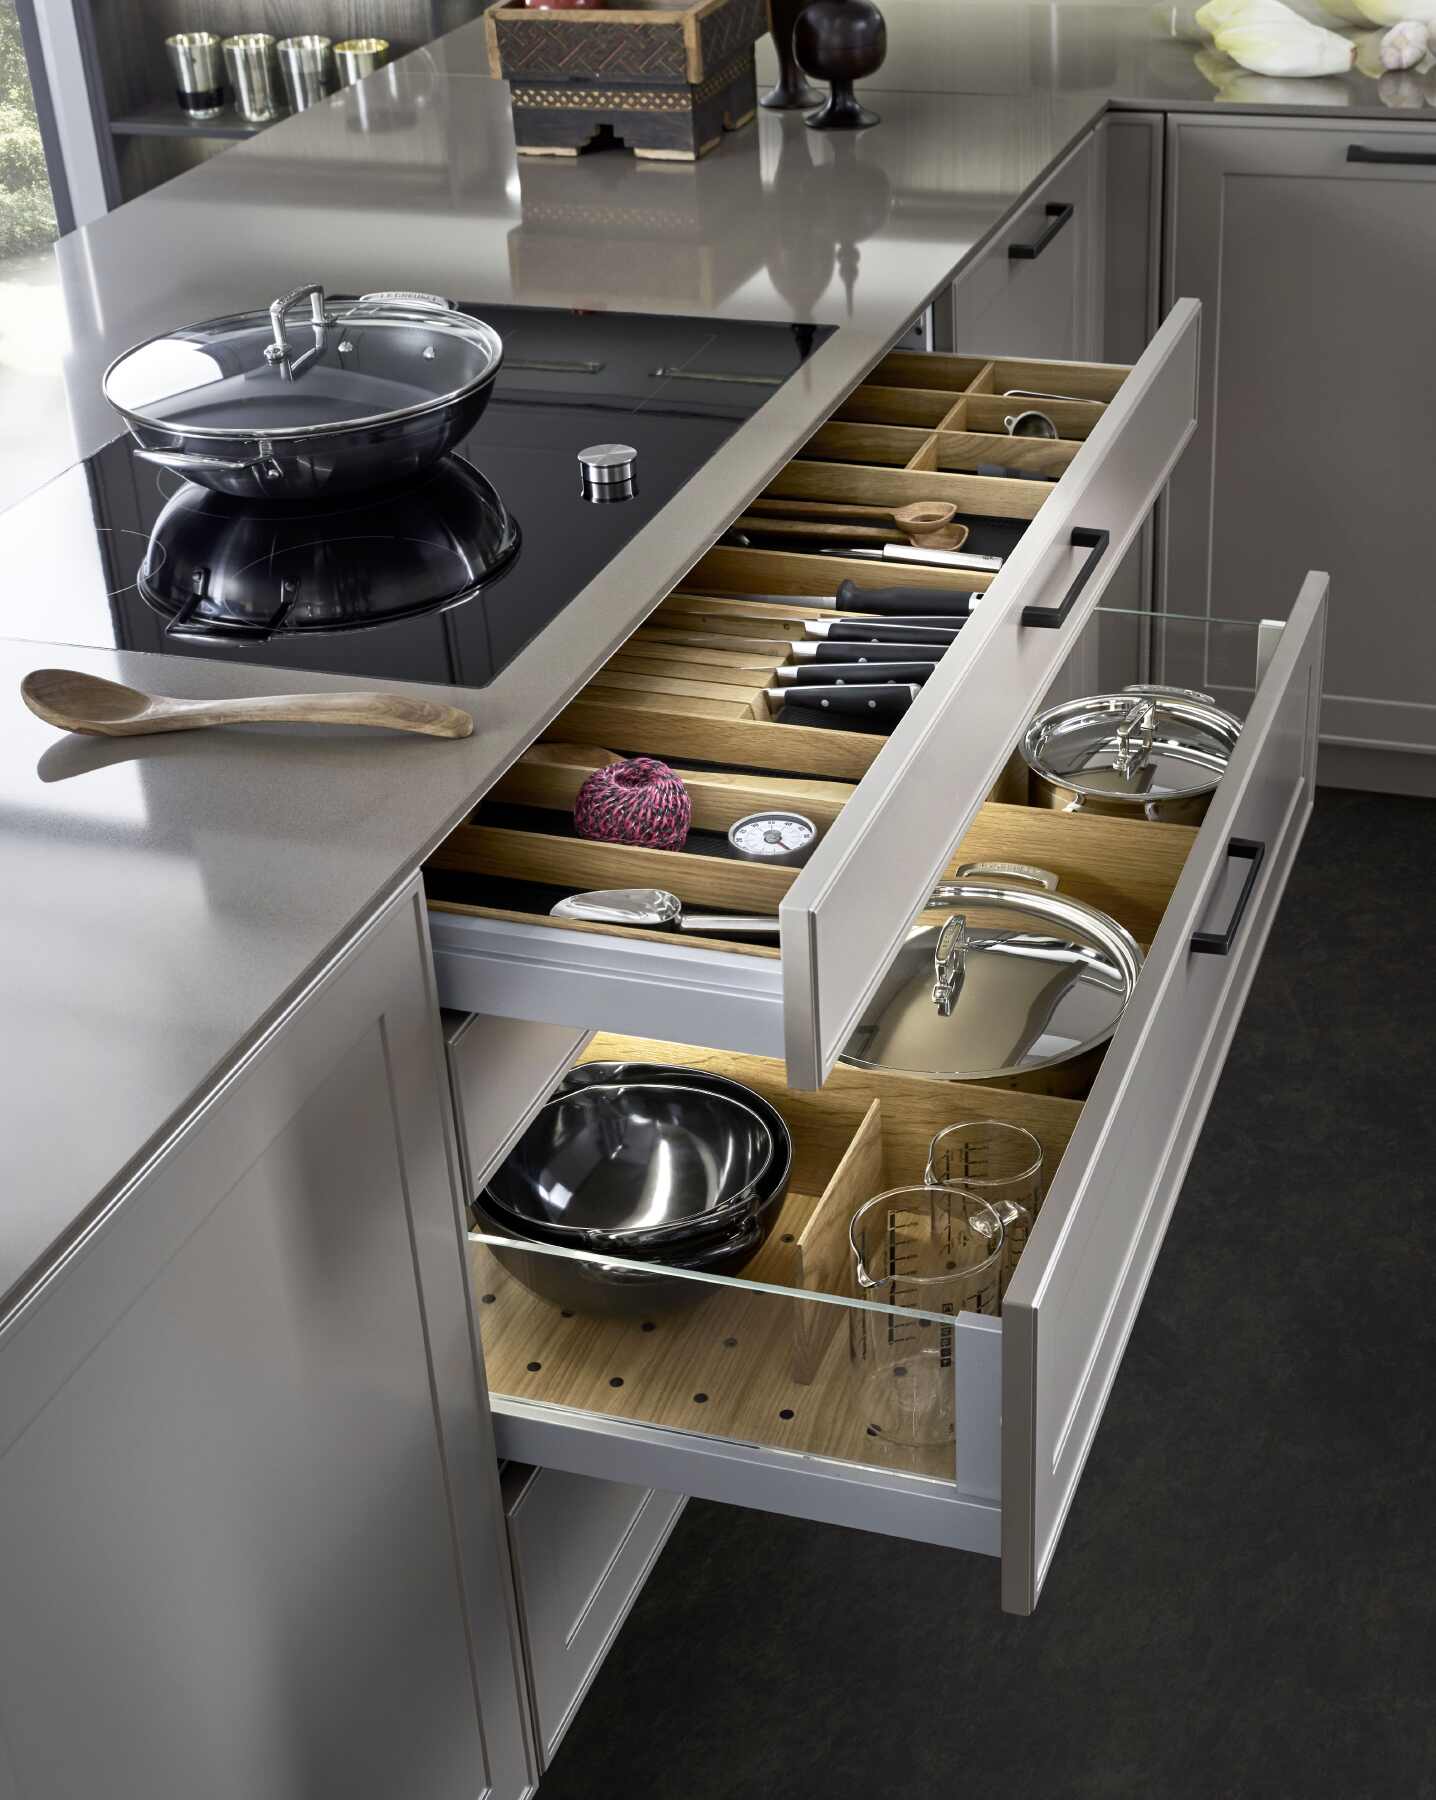 cutlery trays in kitchen drawer